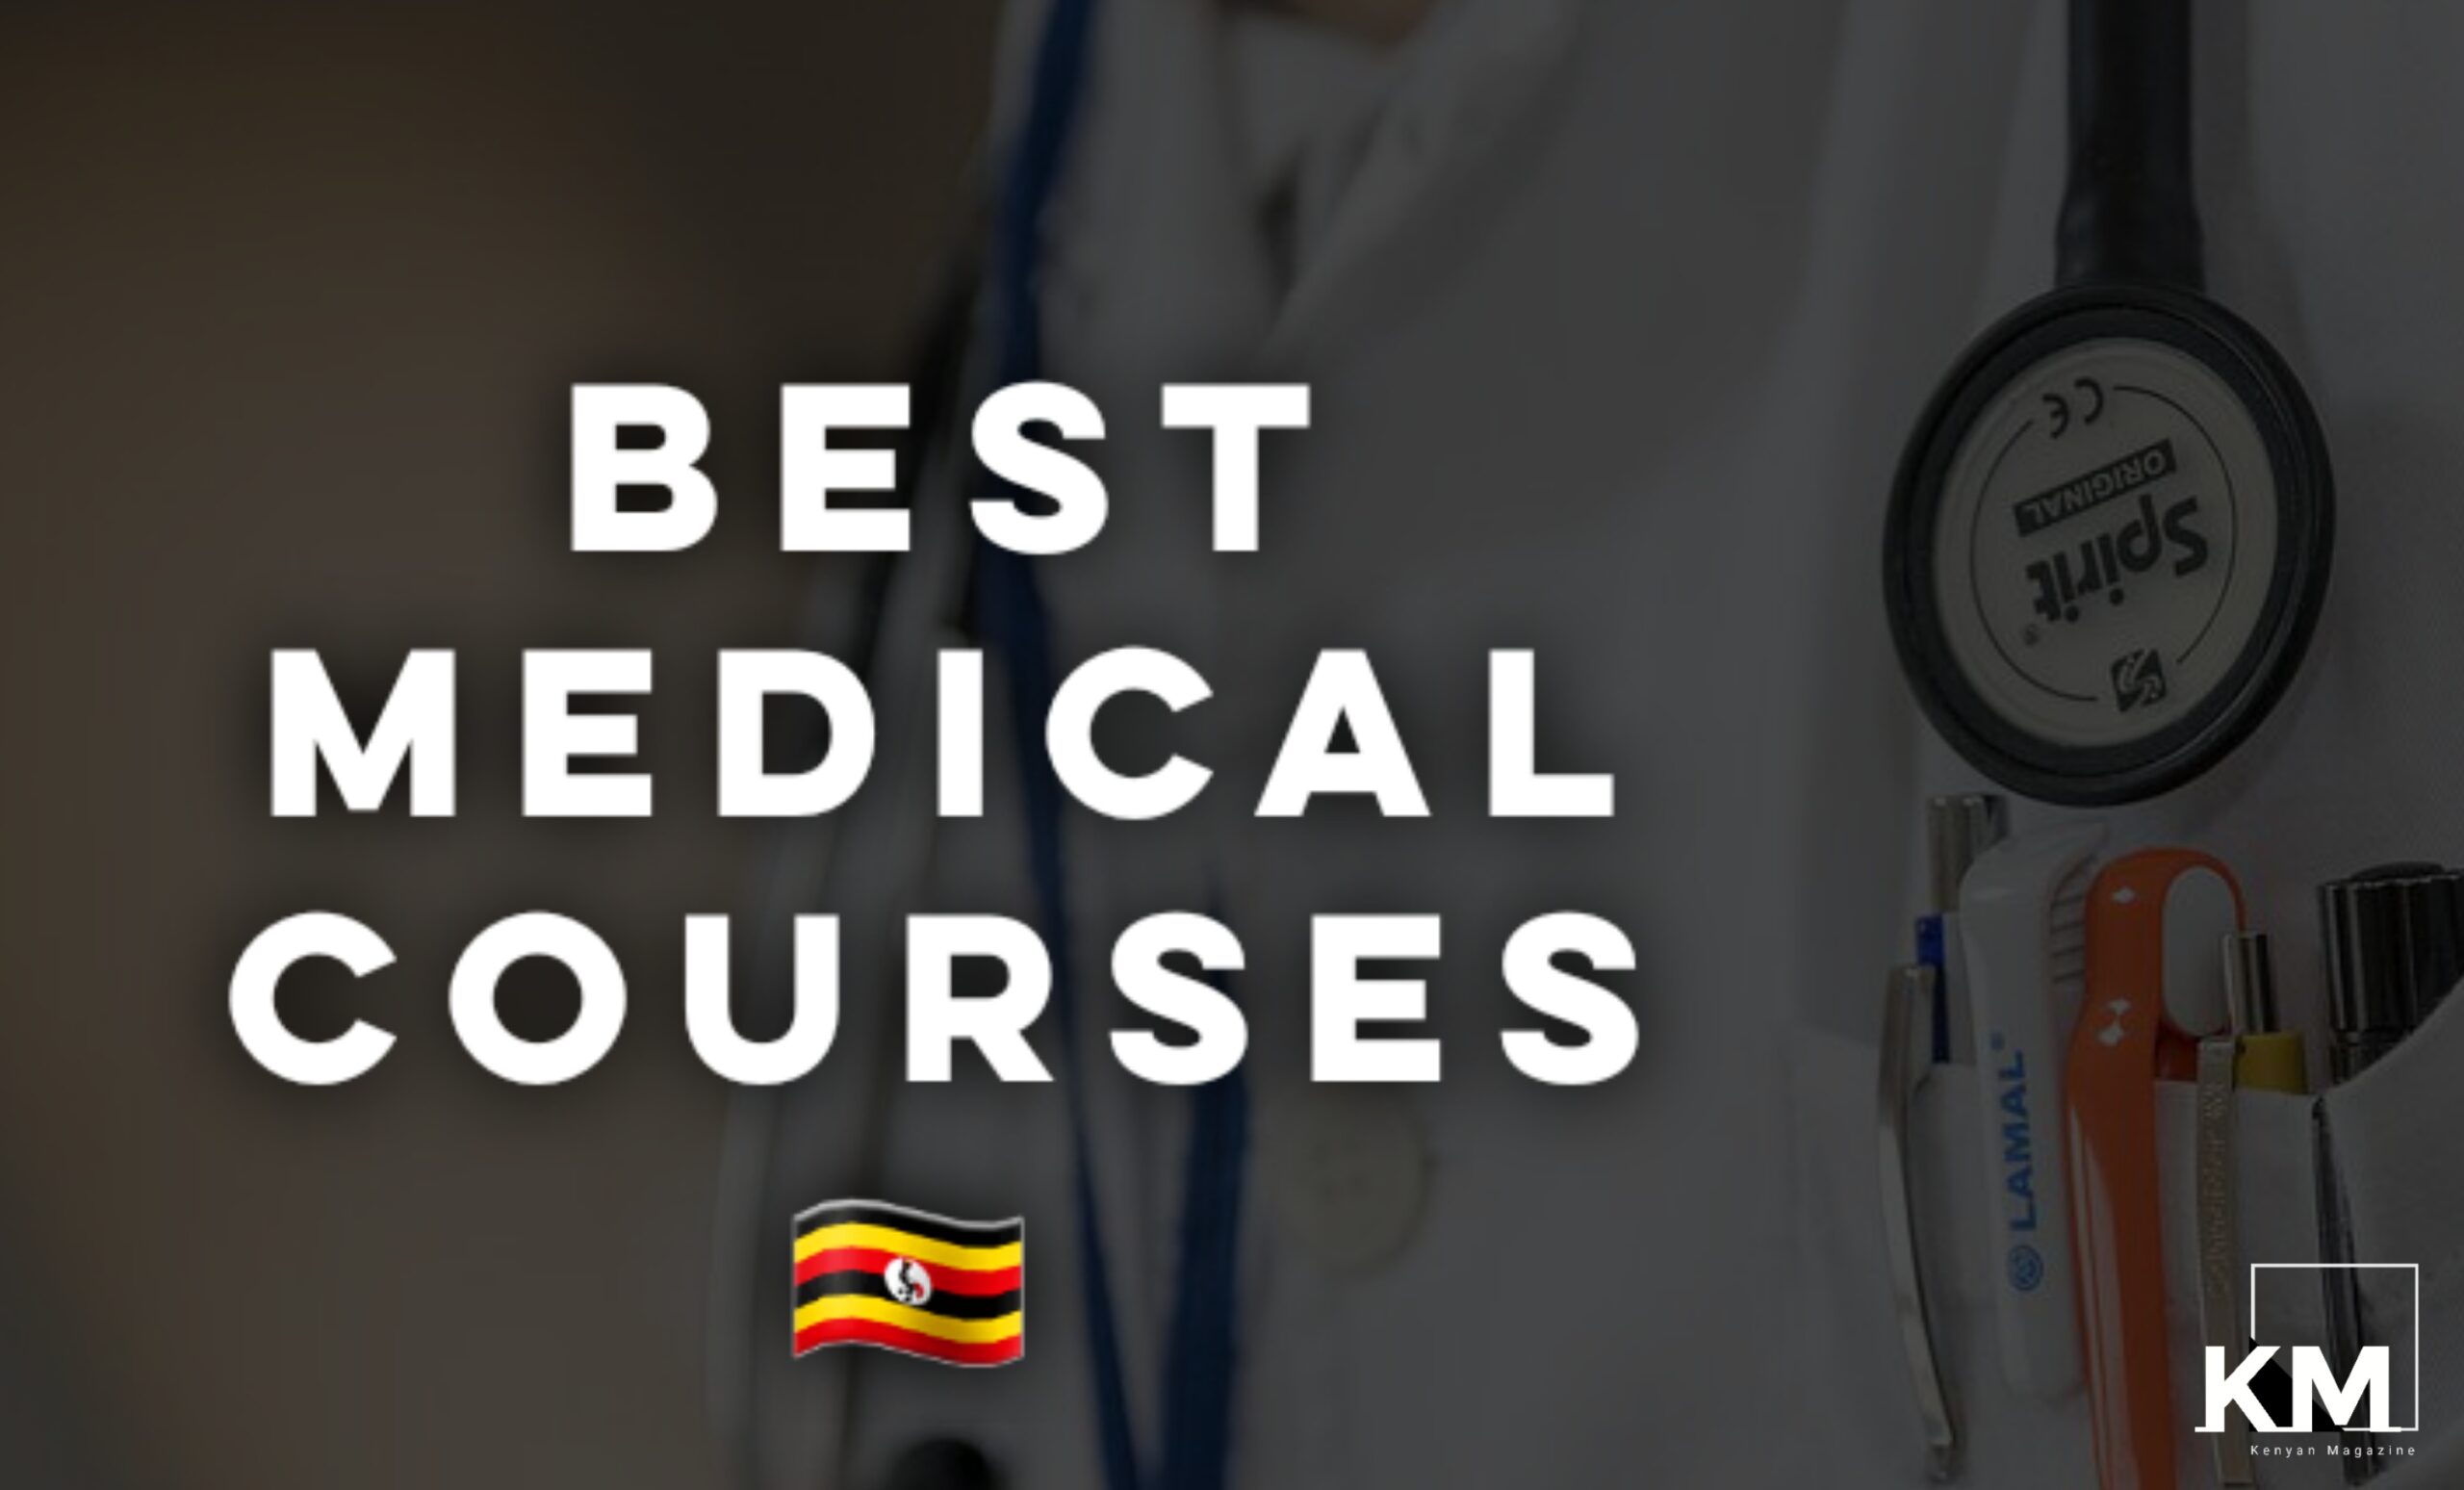 Best Medical Courses in Uganda